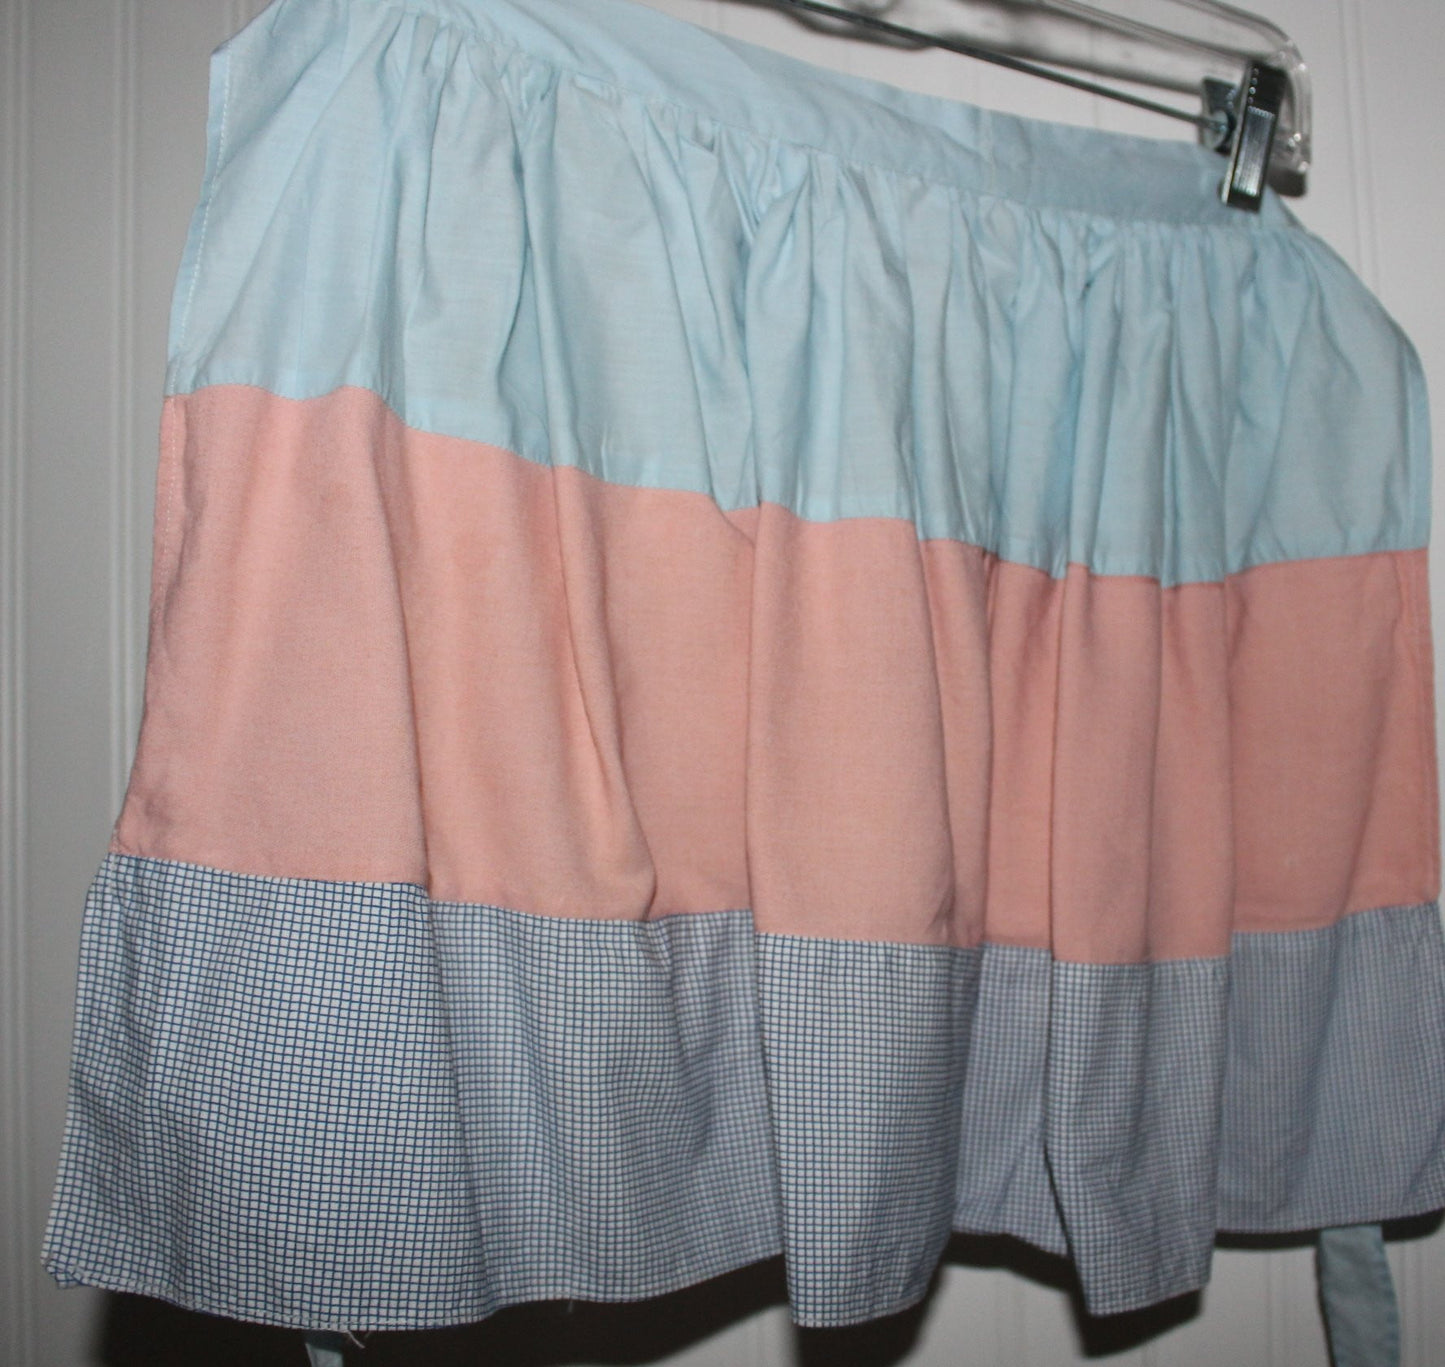 Kitchen Aprons 3 Vintage Mid Century Cotton Lace Trim Pocket Wear or Pattern grandmother